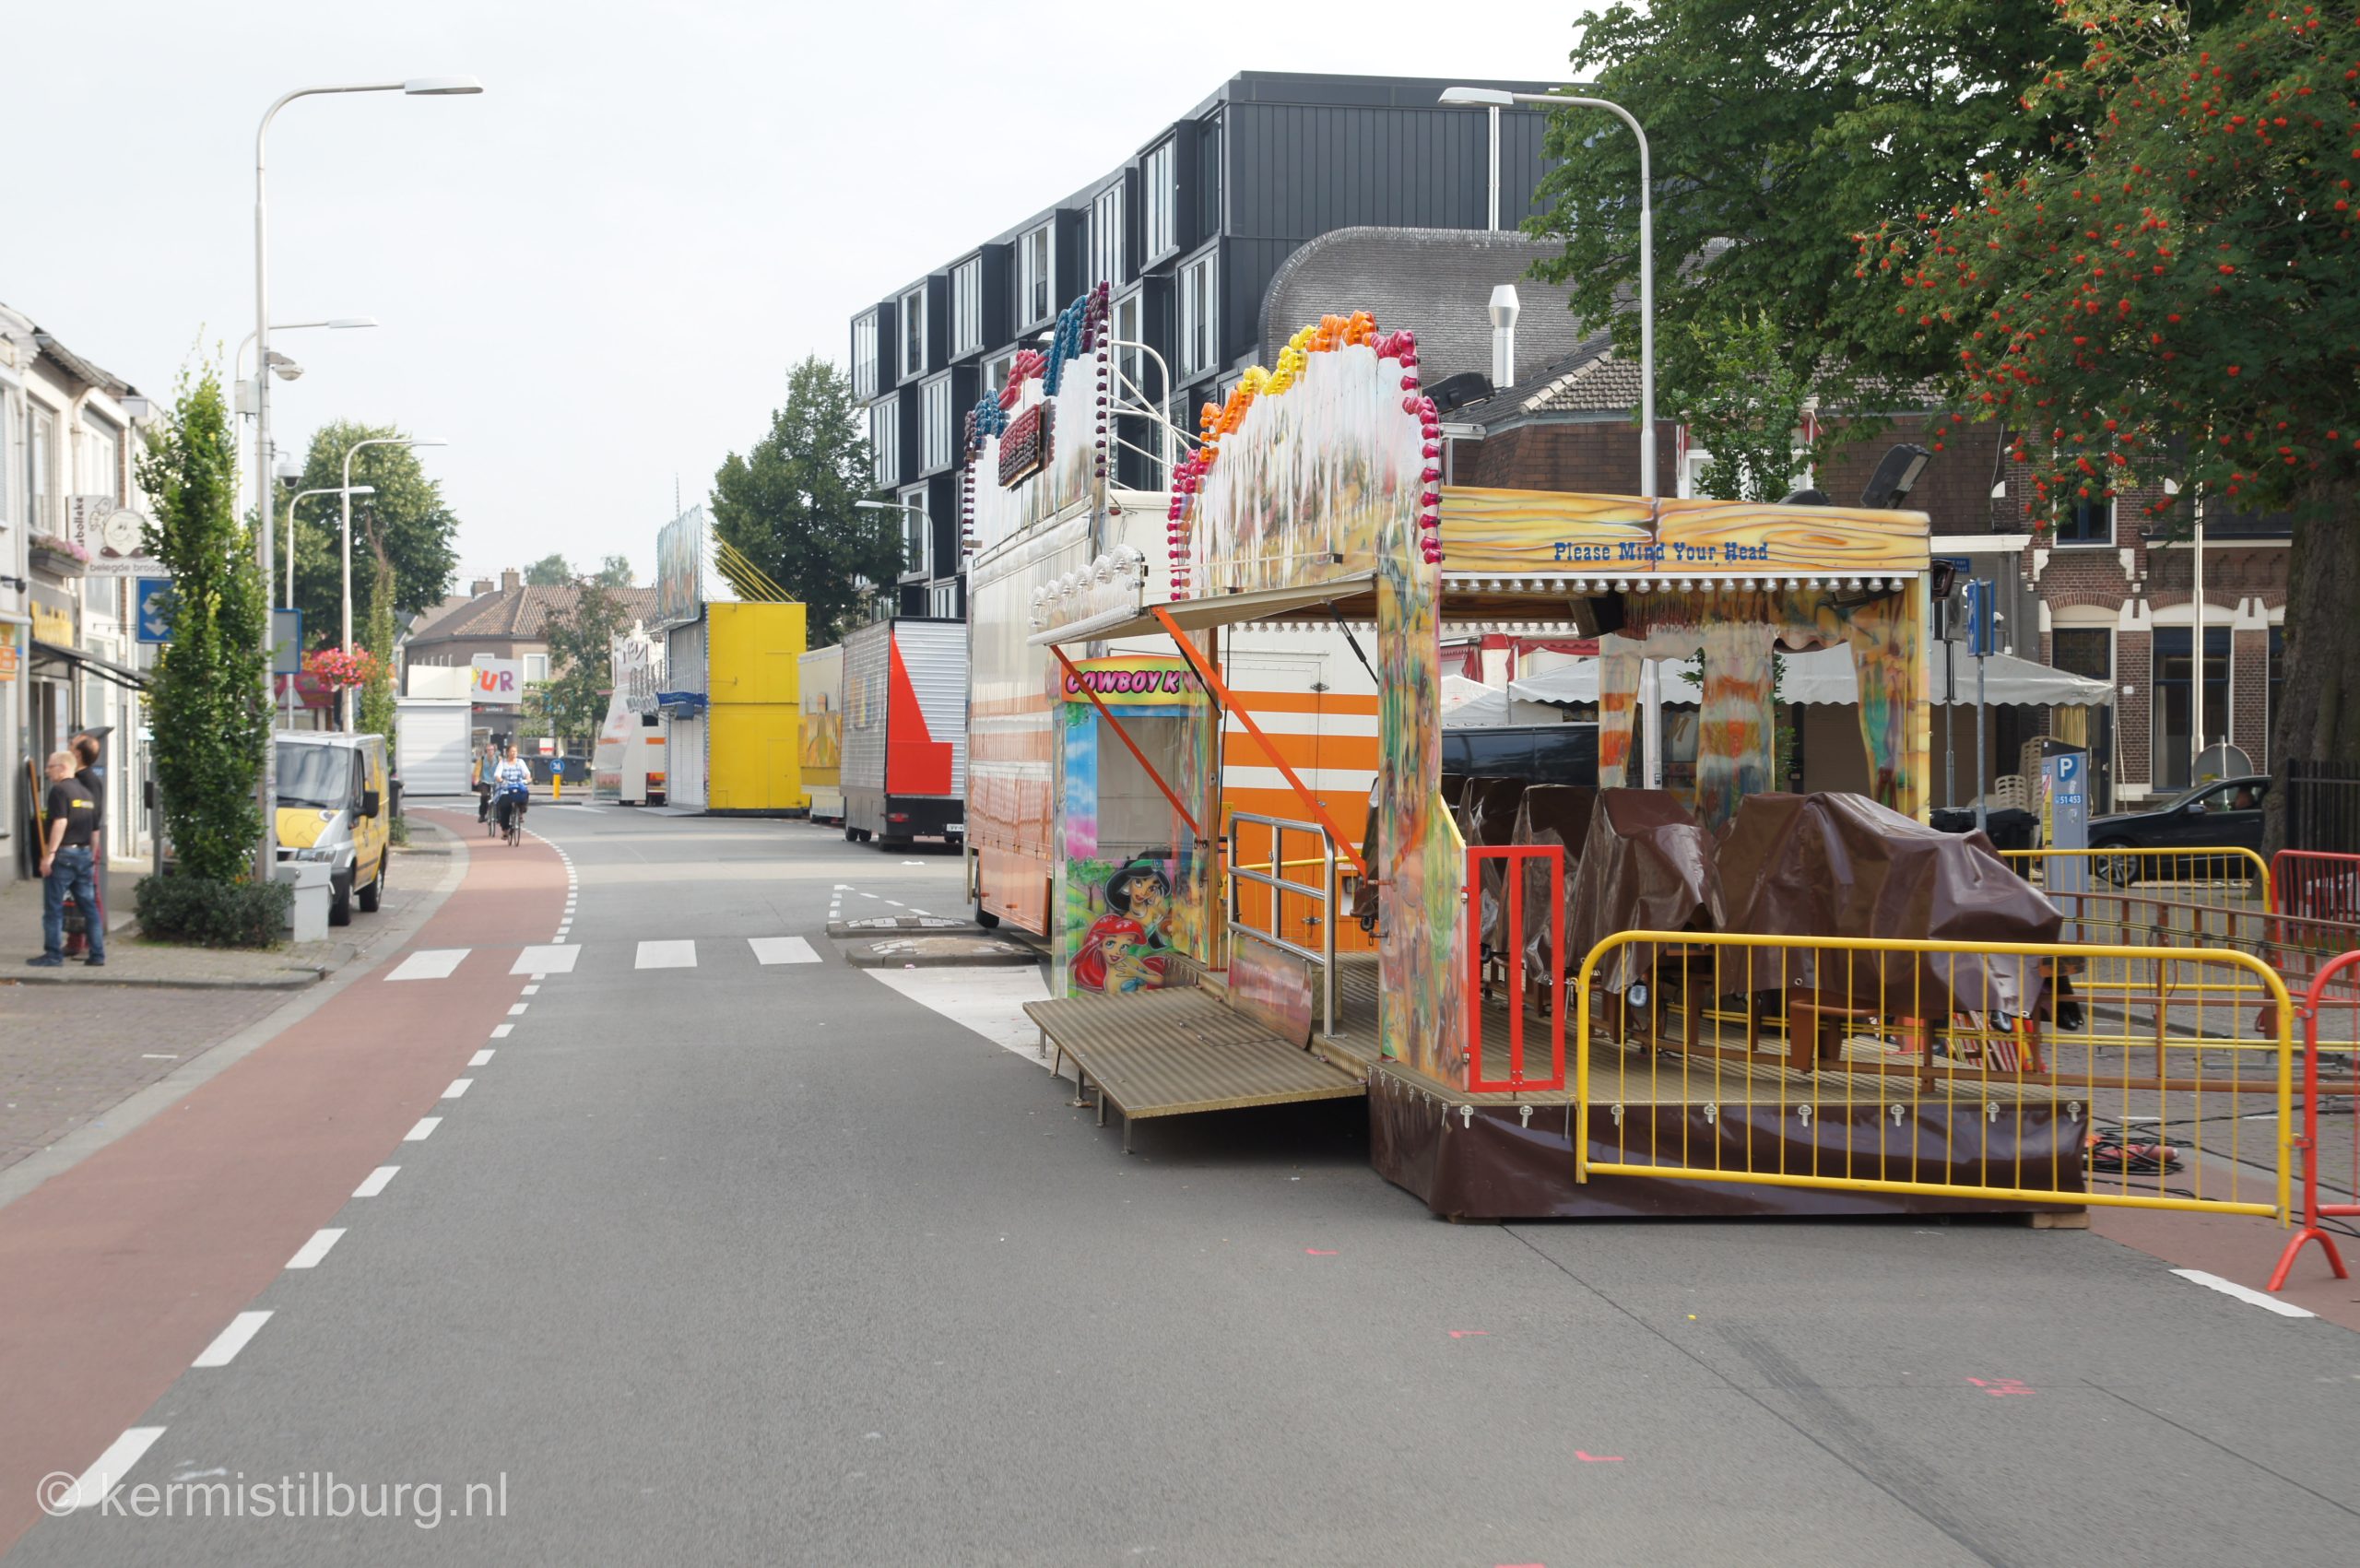 2014, Kermis, Tilburg, Tilburgse kermis, bouwen